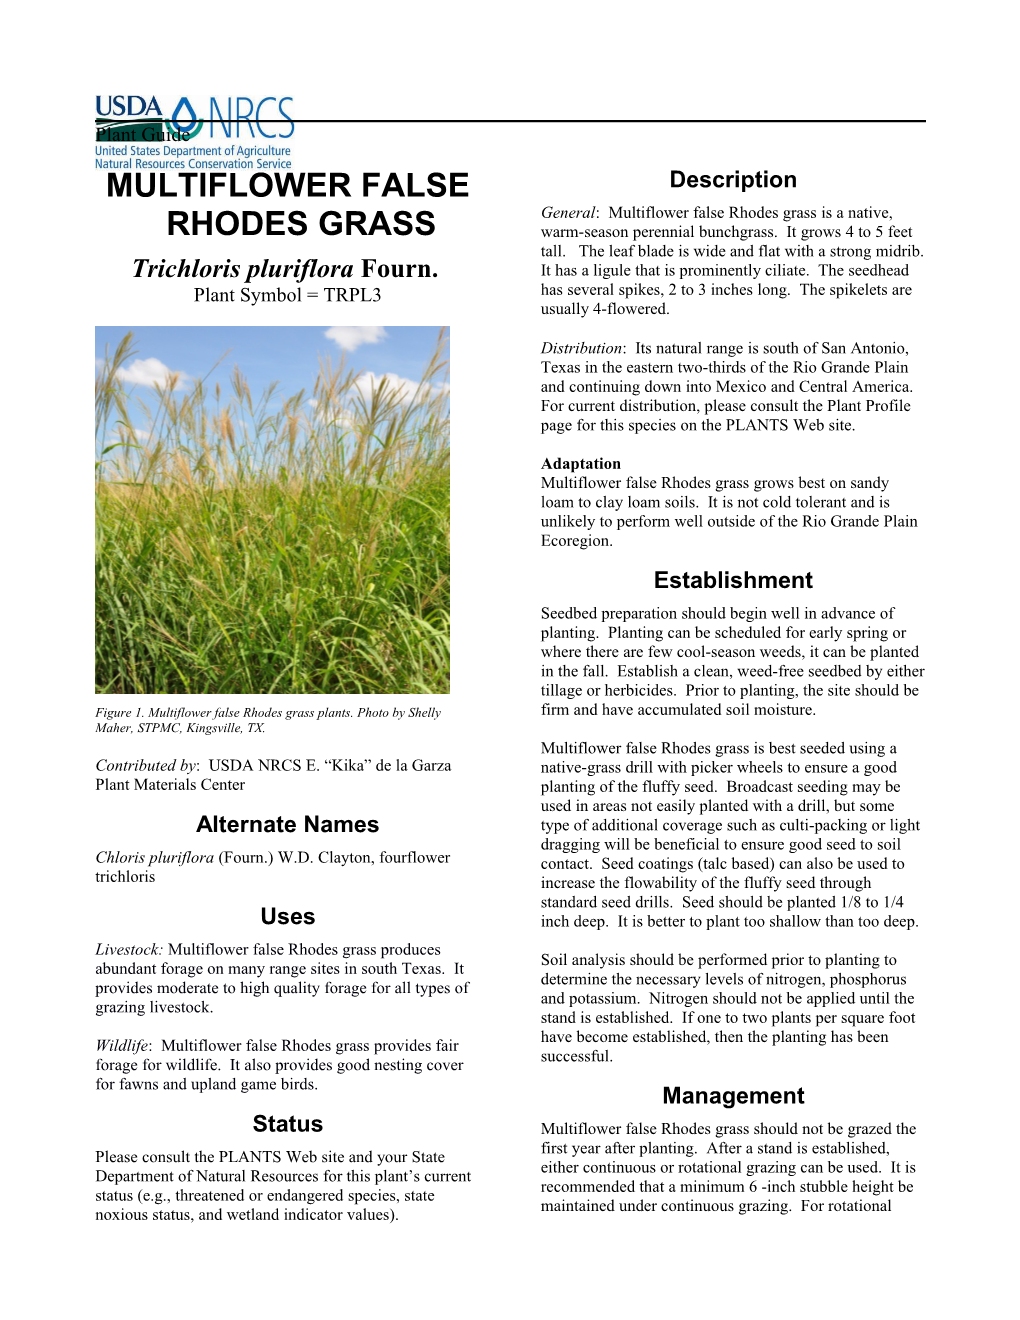 Multiflower False Rhodes Grass (Trichloris Pluriflora Fourn.) Plant Guide